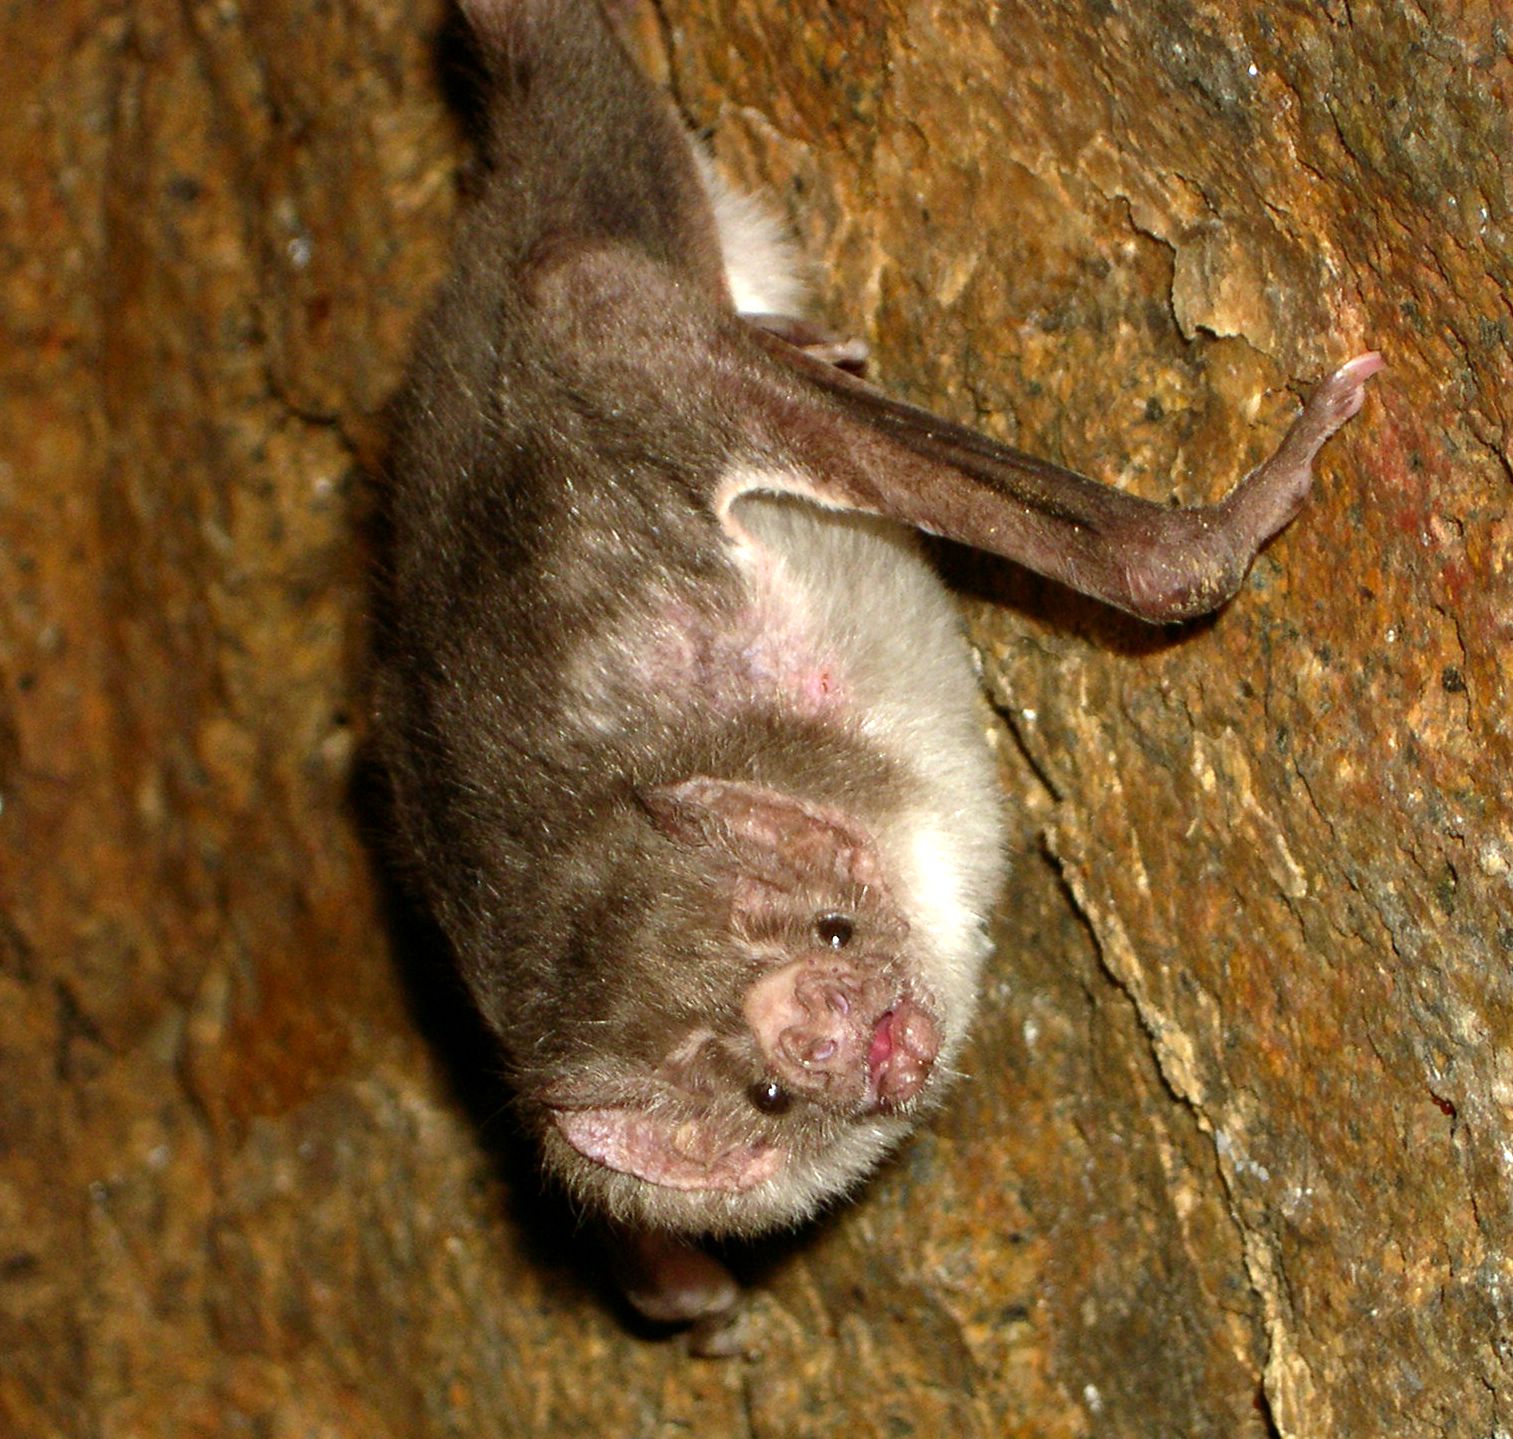 desmodus rotundus @ http://en.wikipedia.org/wiki/Vampire_bat